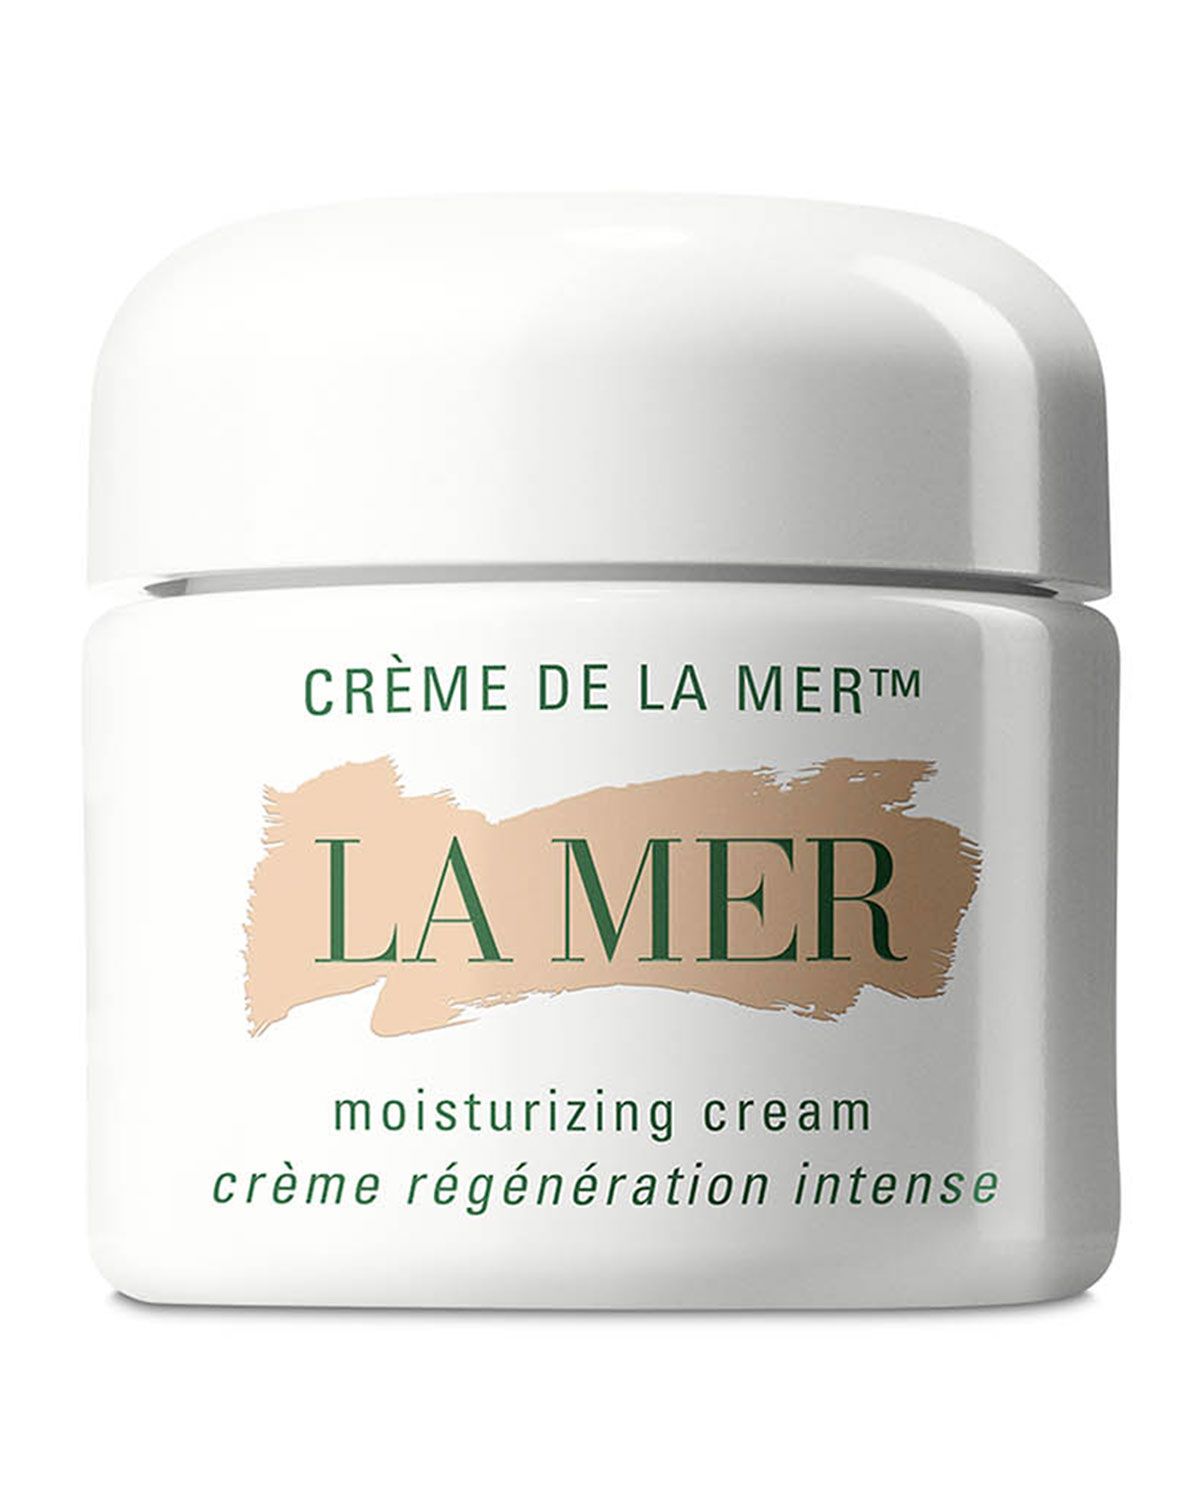 2oz. Crème de la Mer Moisturizing Cream | Neiman Marcus